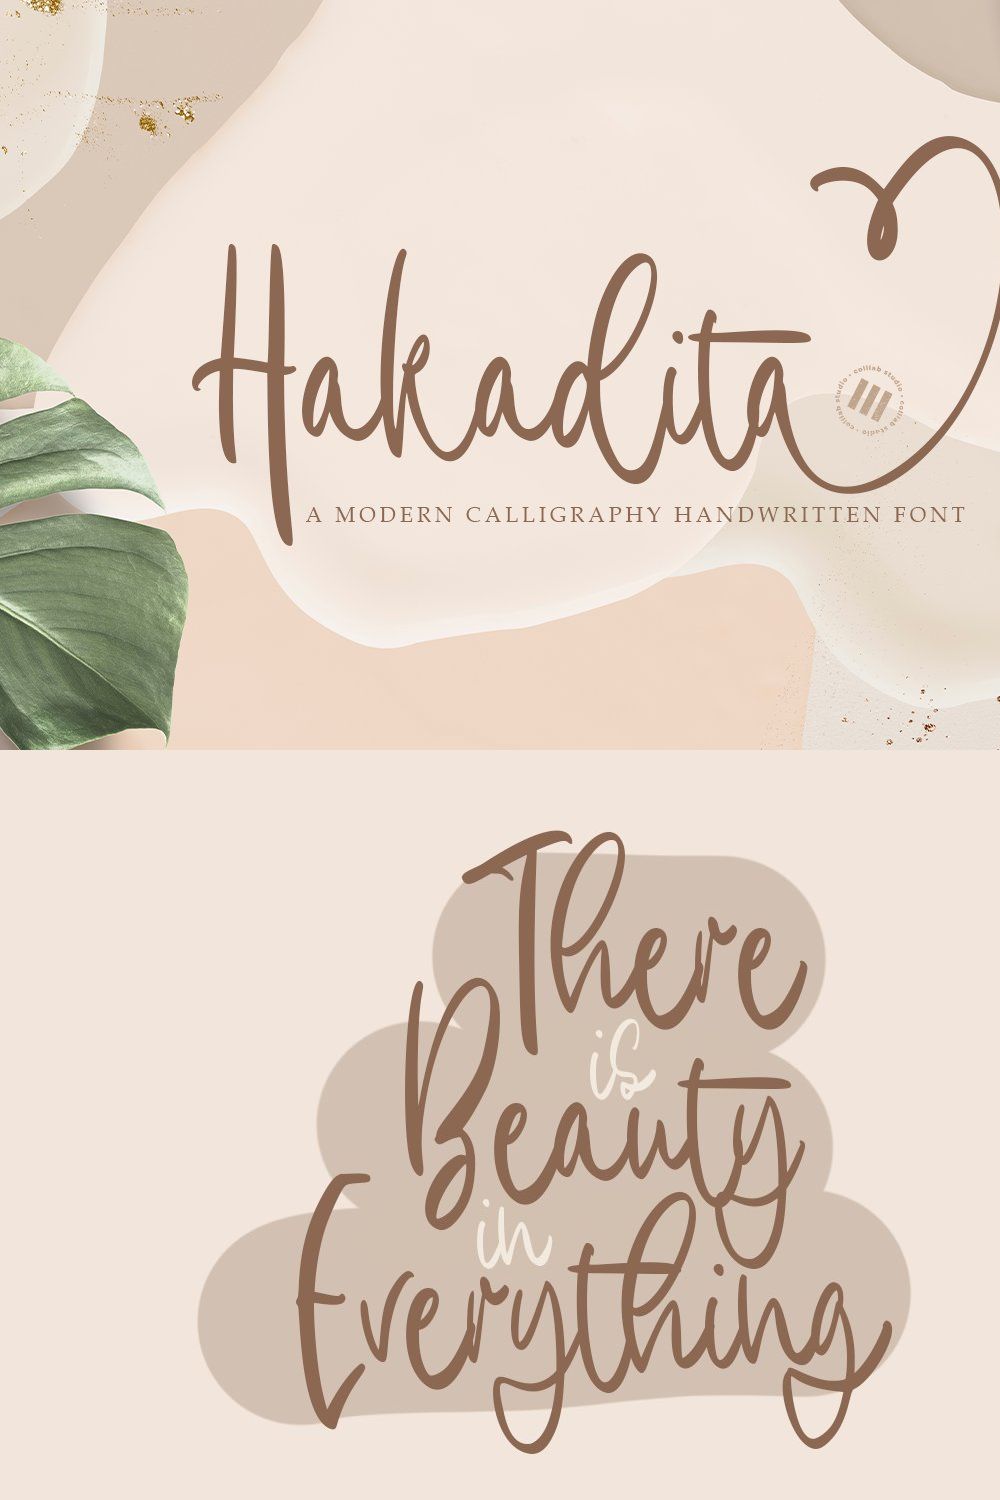 Hakadita | A modern Calligraphy Font pinterest preview image.